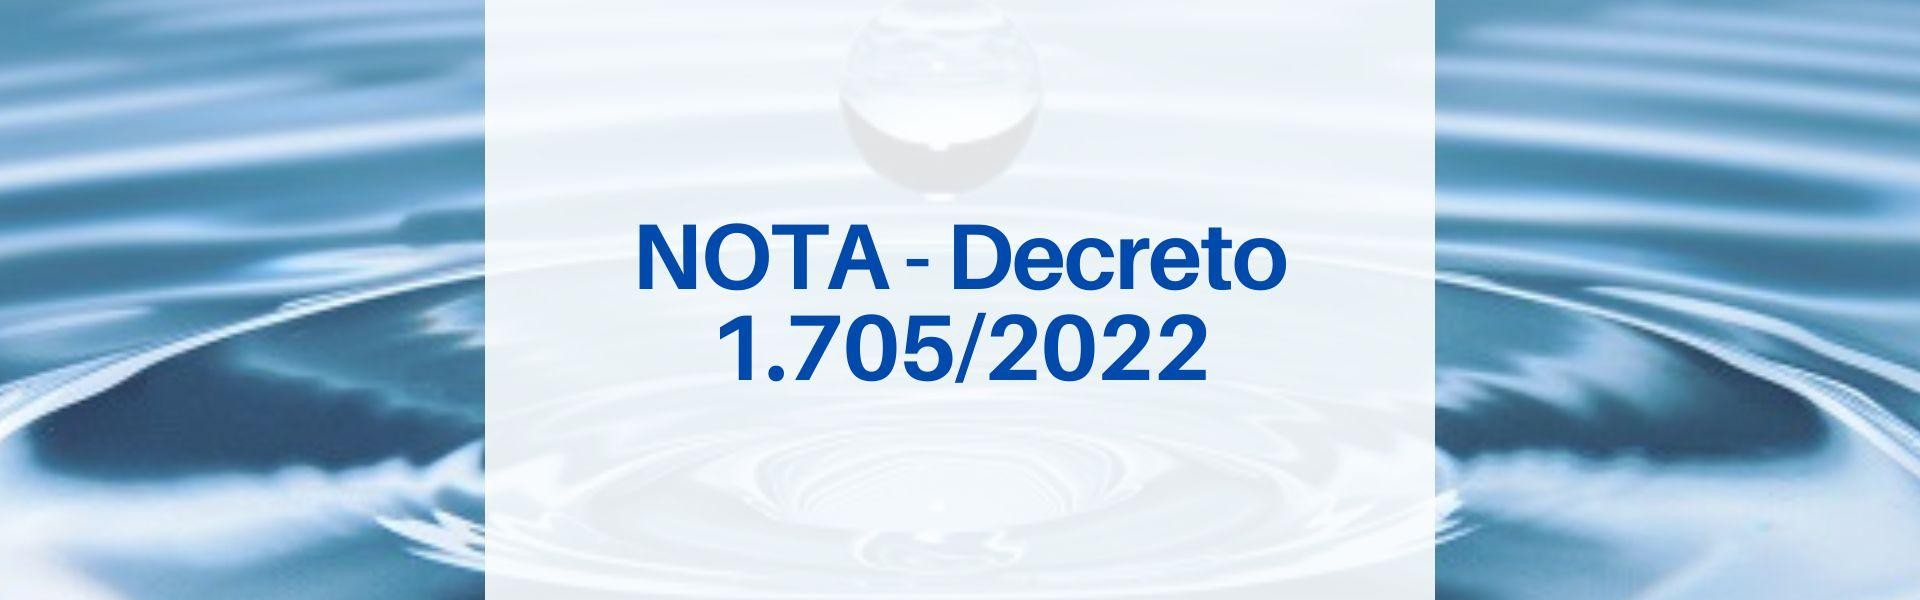 NOTA - Decreto 1.705/2022